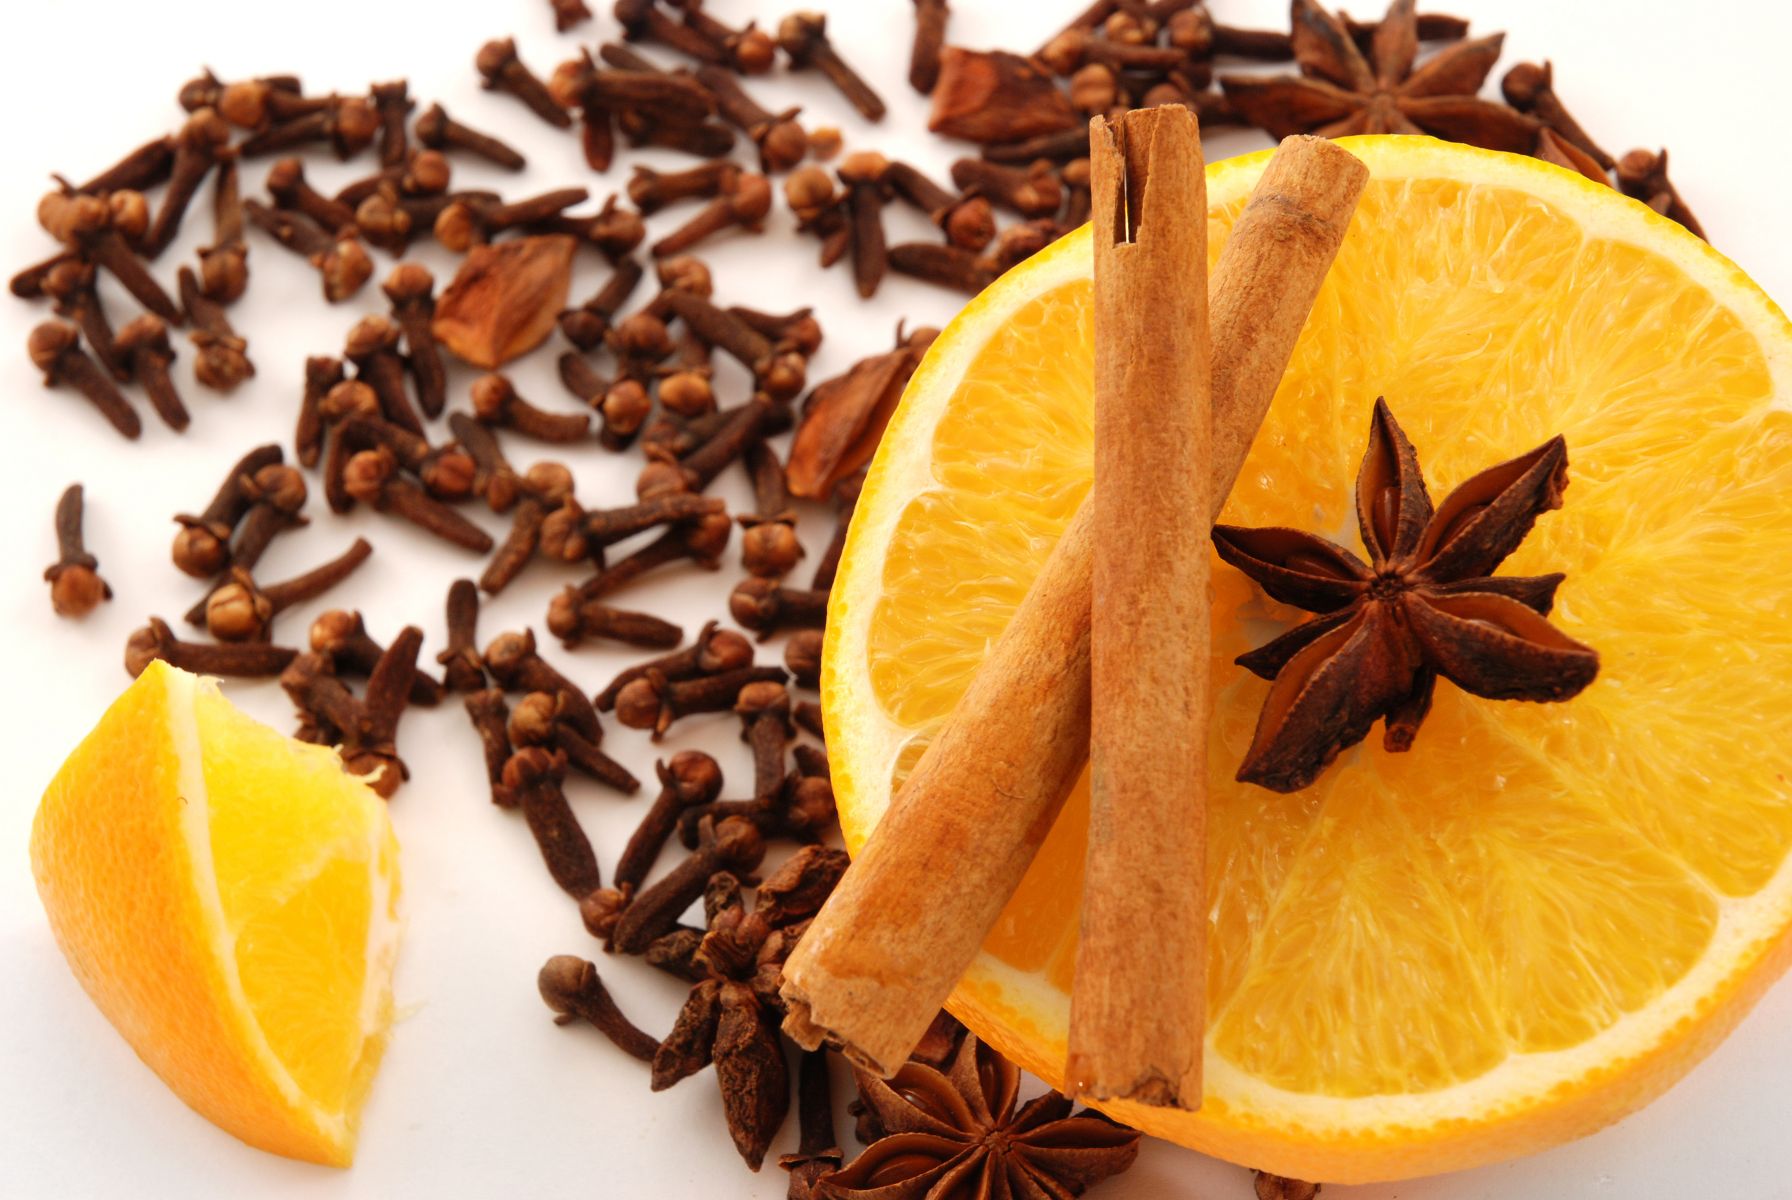 Clove, cinnamon sticks, star anise  and a sliced open orange | photo: © Skoric | Dreamstime.com 